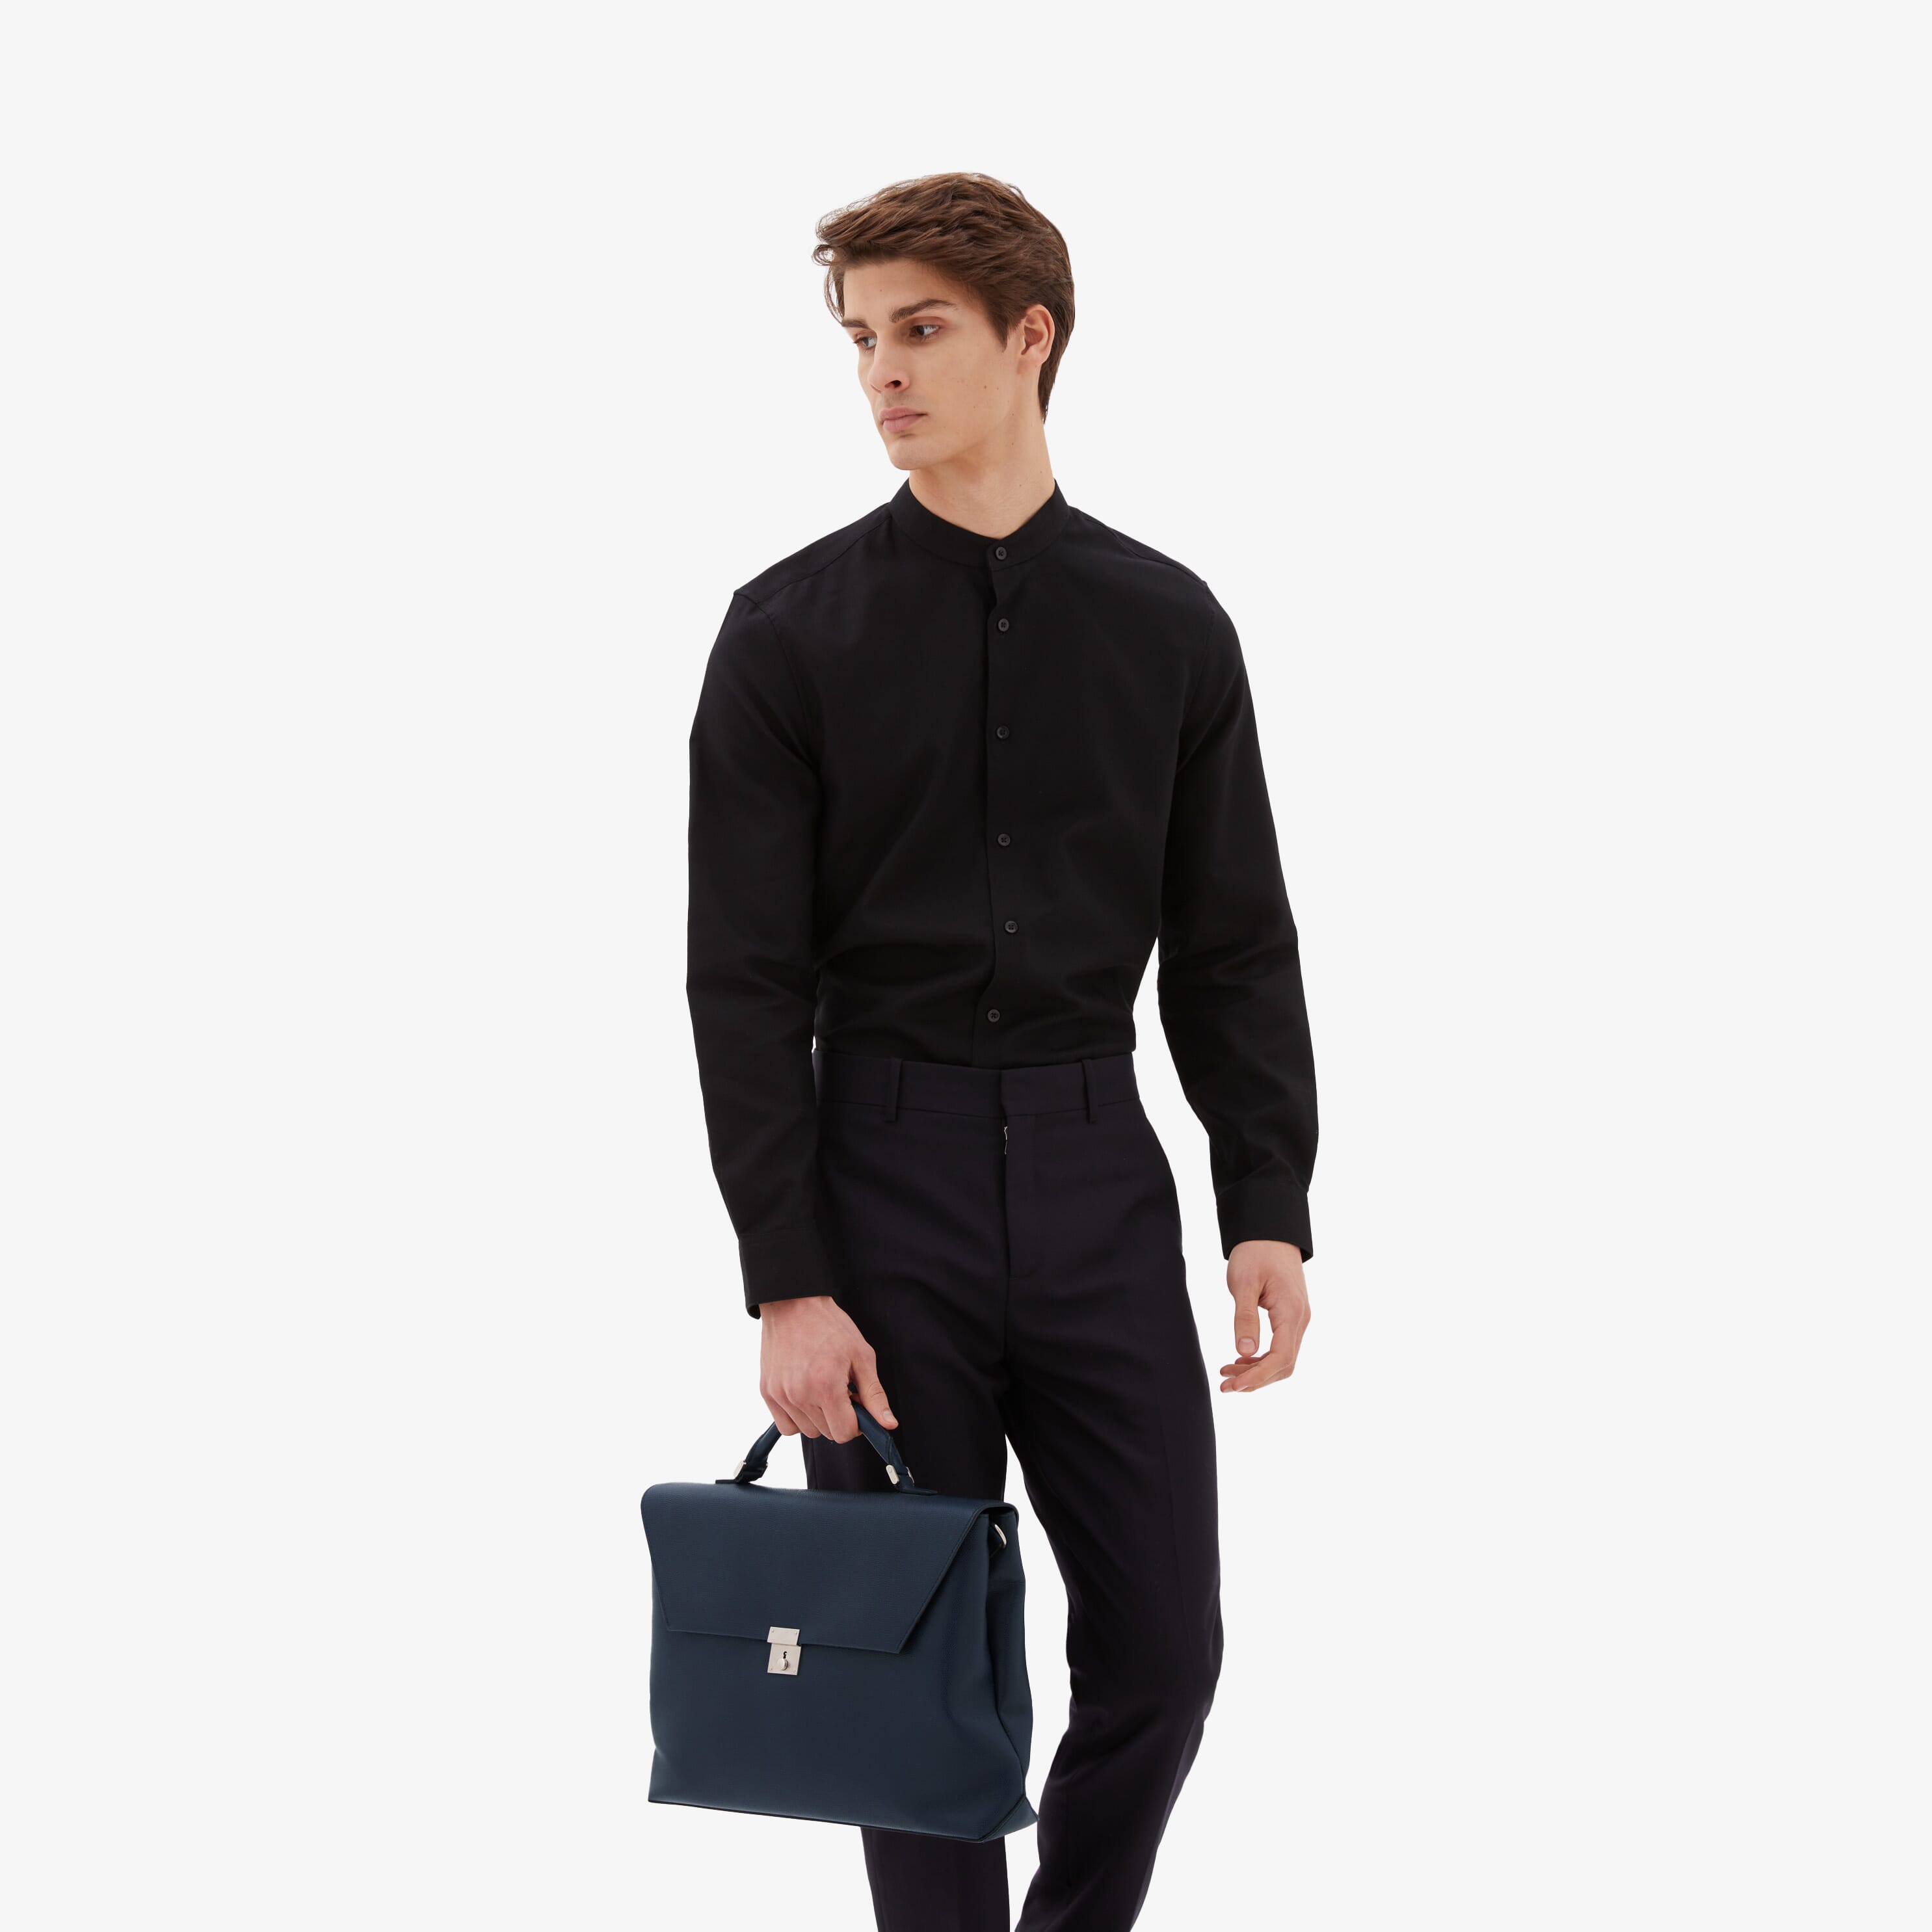 Avietta: Men's leather briefcases, messenger bags, satchels | Valextra